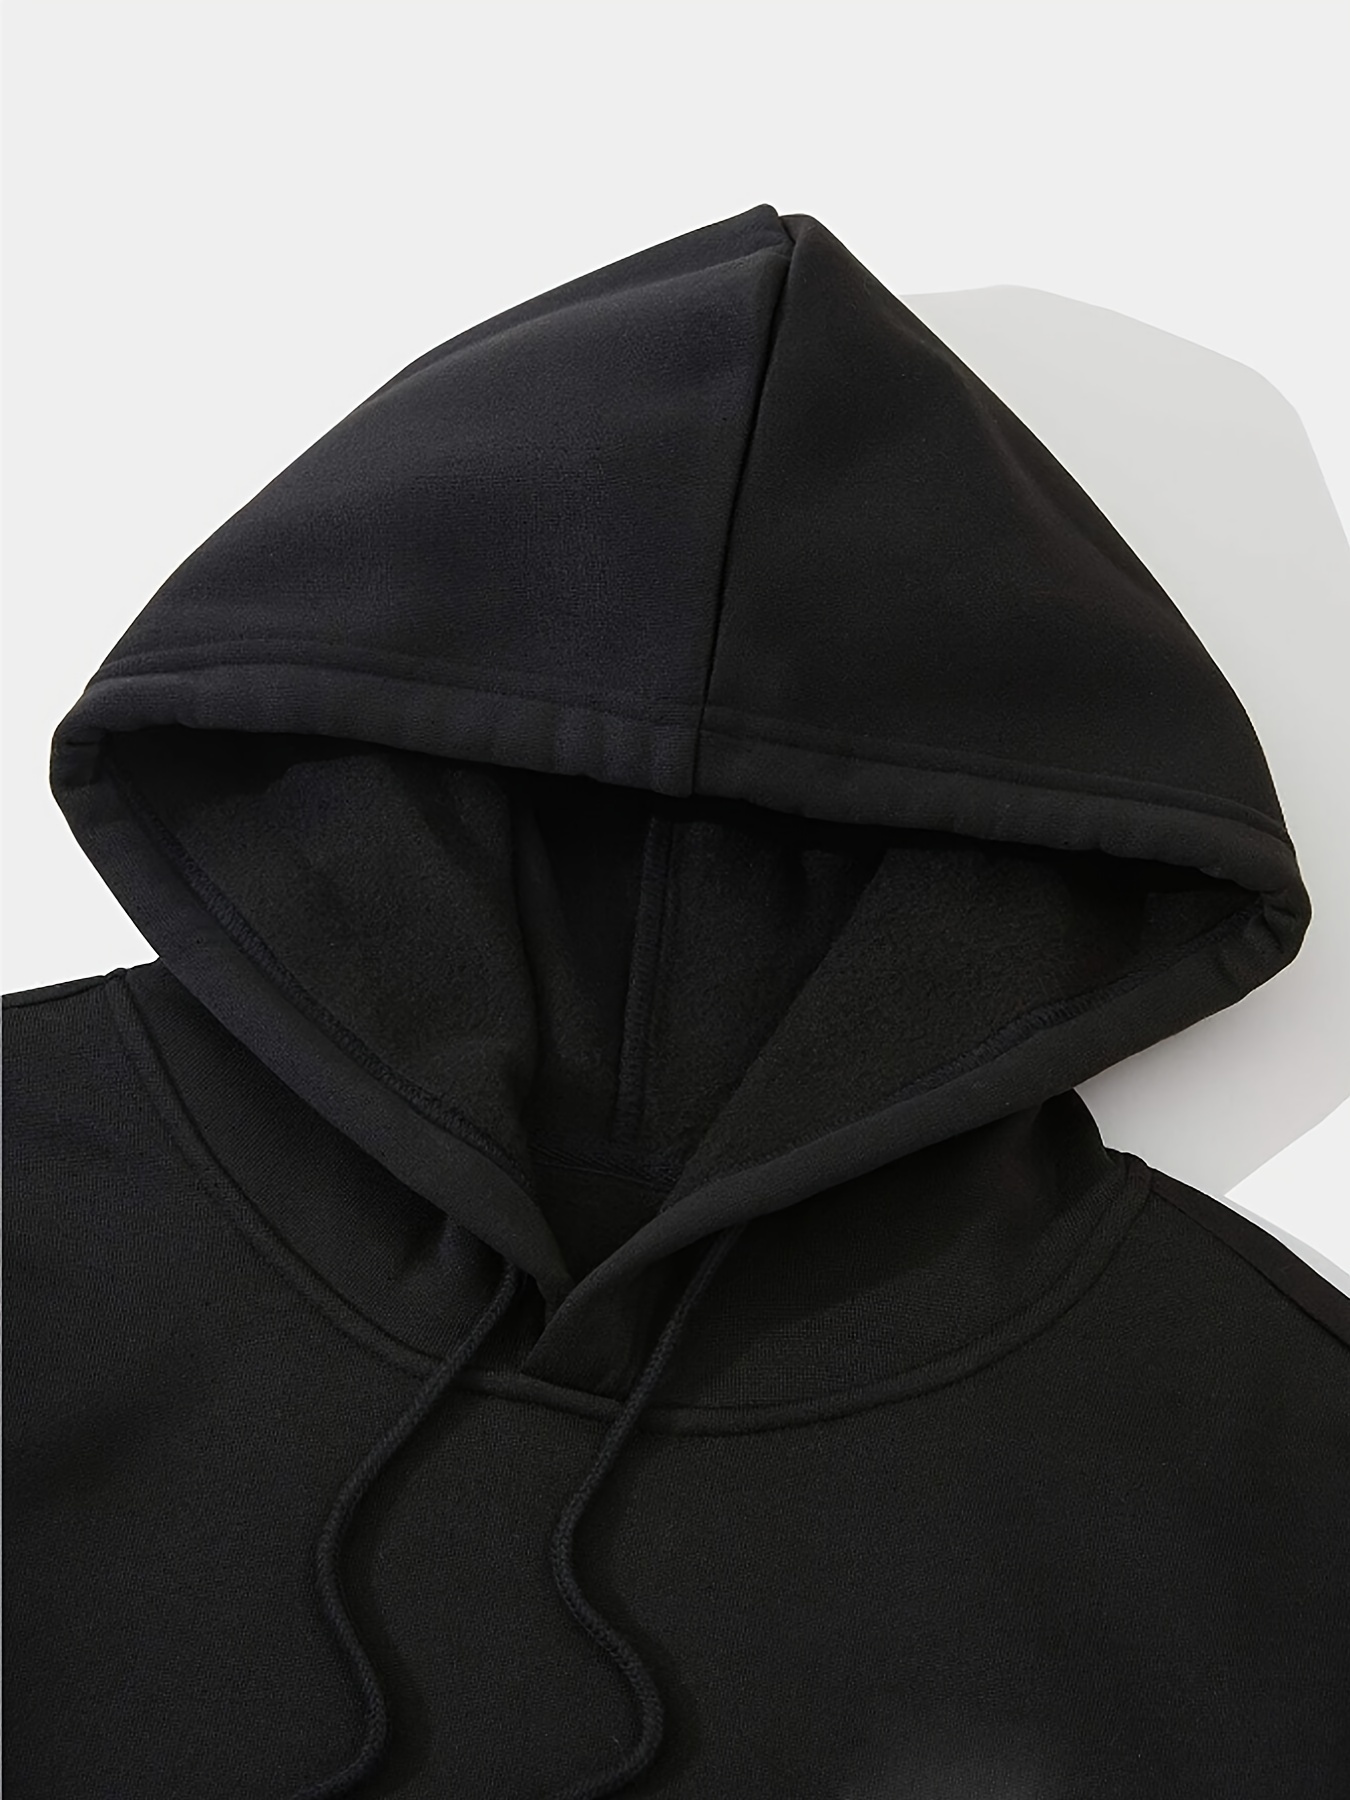 FZVYD Sudadera negra con capucha para hombre, sudadera con capucha de gran  tamaño con estampado gráfico de manga larga, casual, con cordón